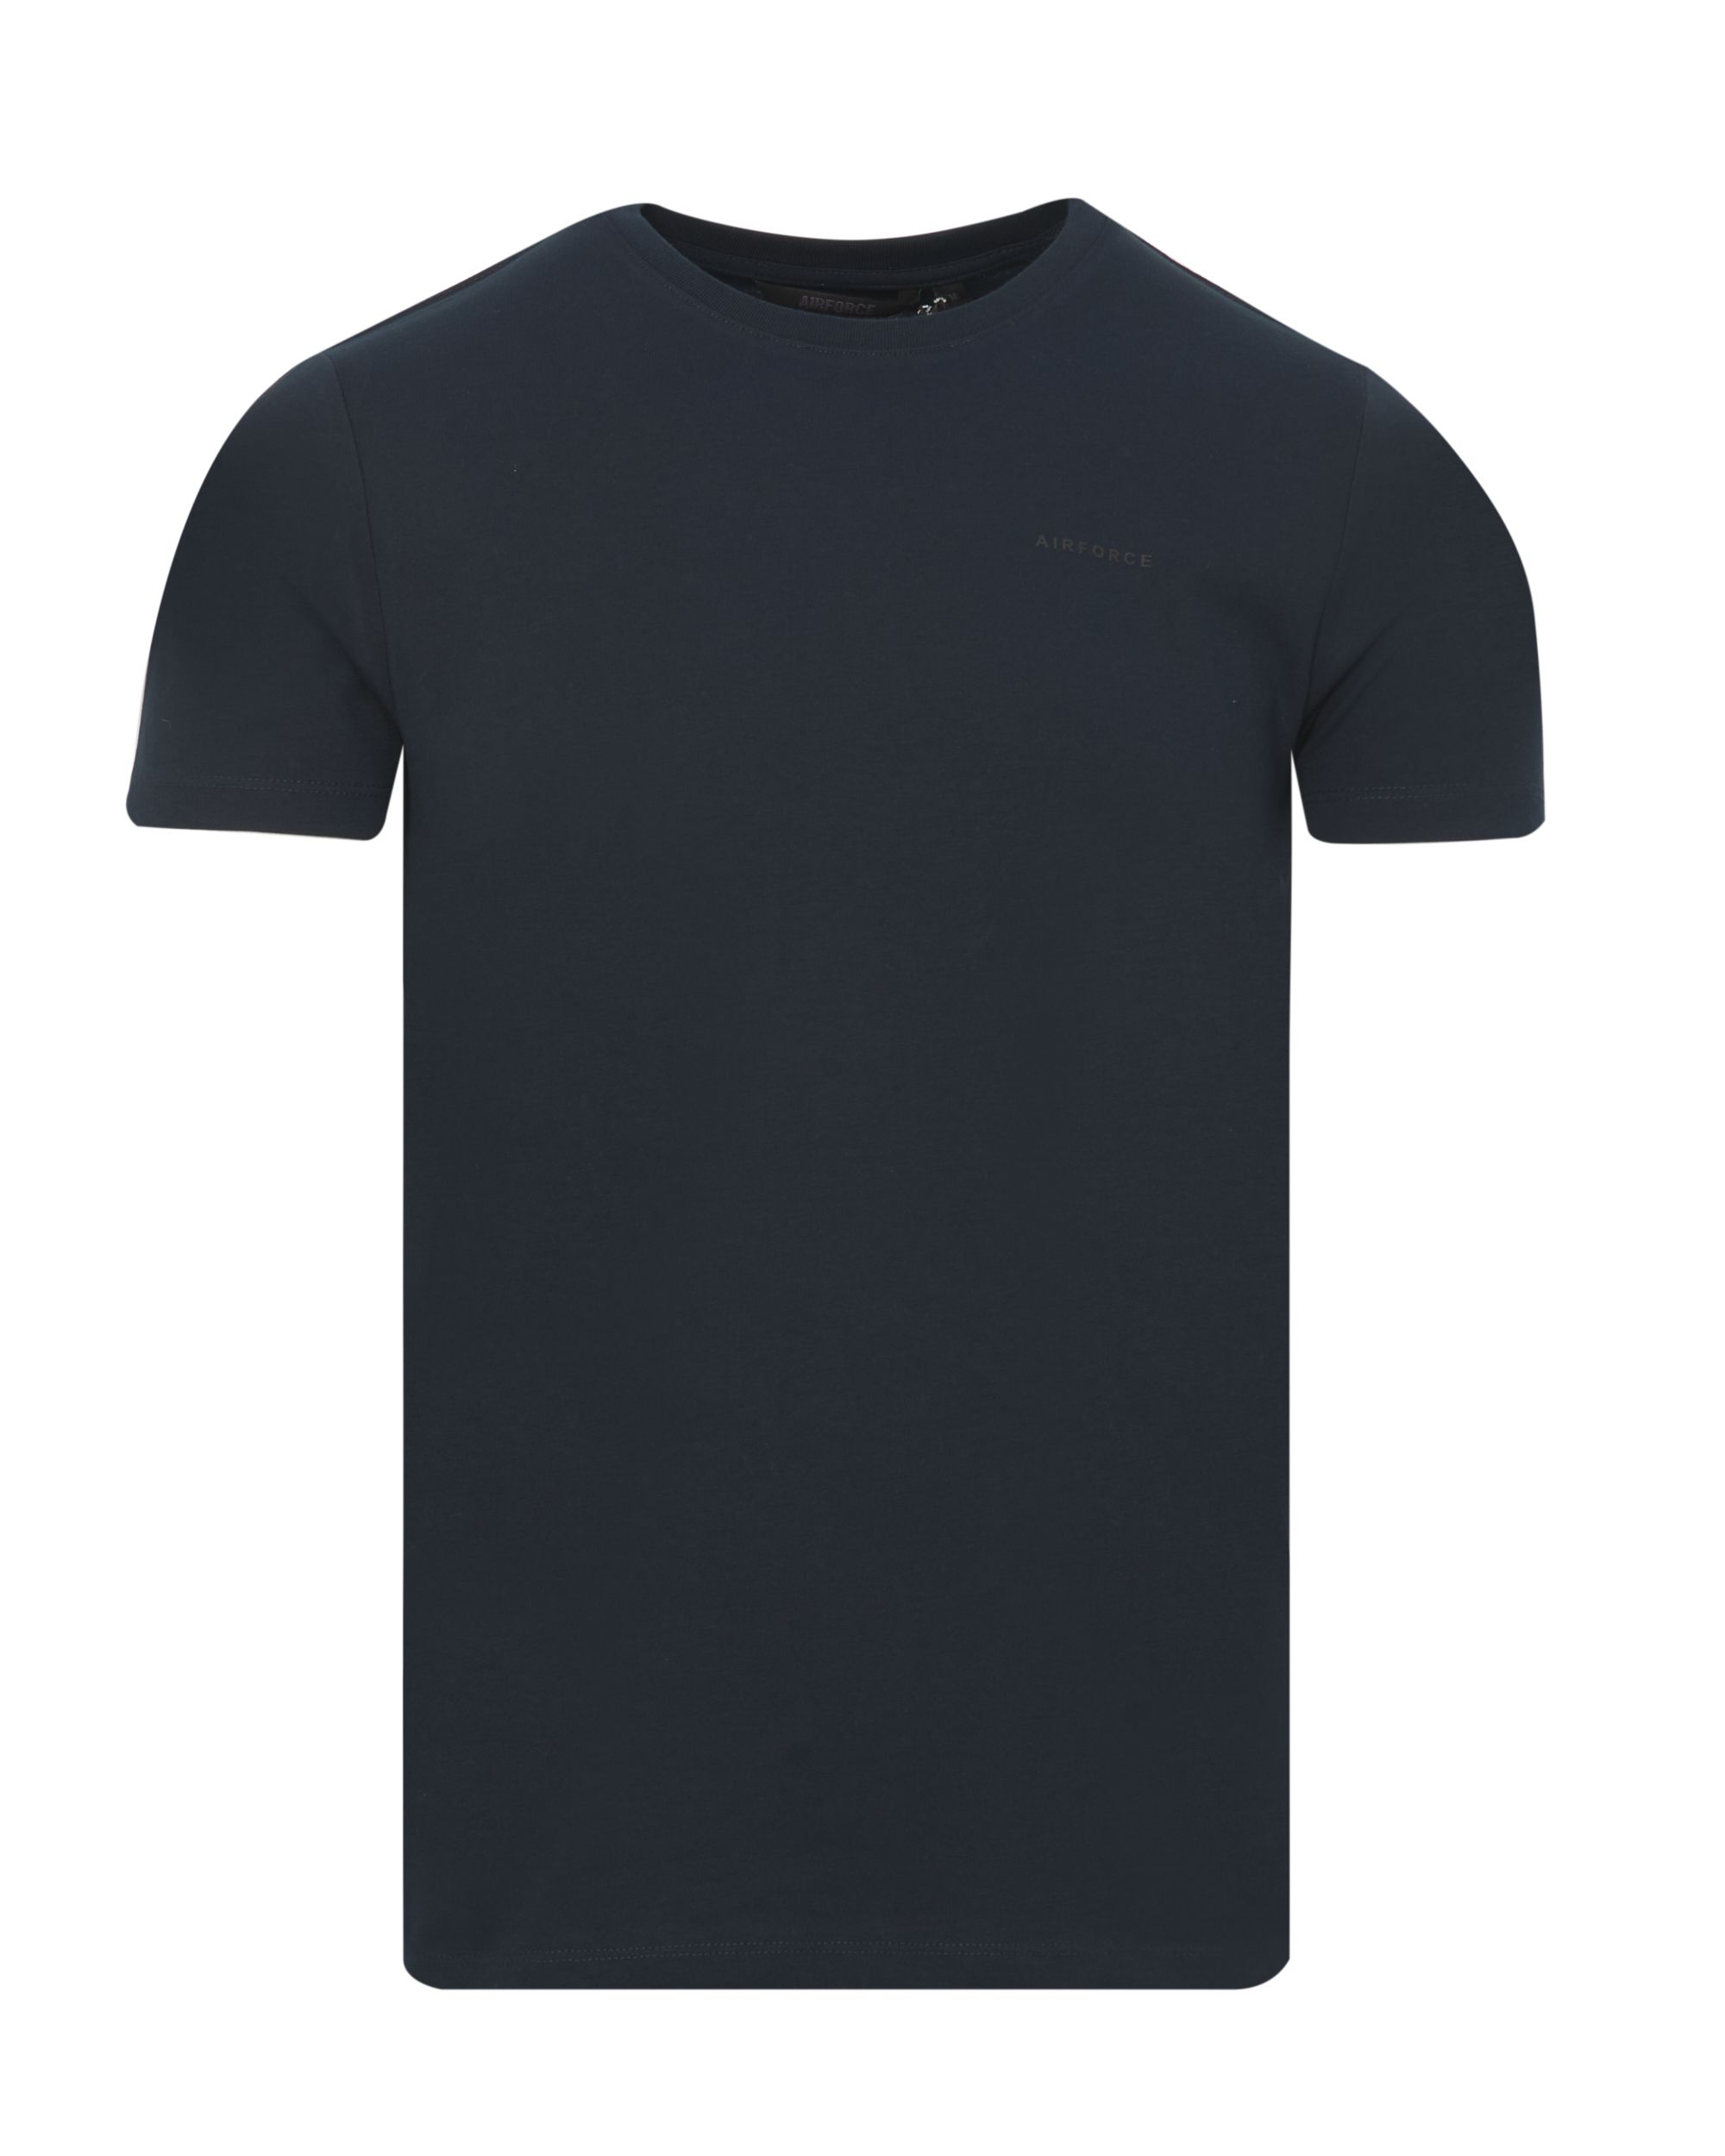 Airforce T-shirt KM Donker blauw 083287-001-L